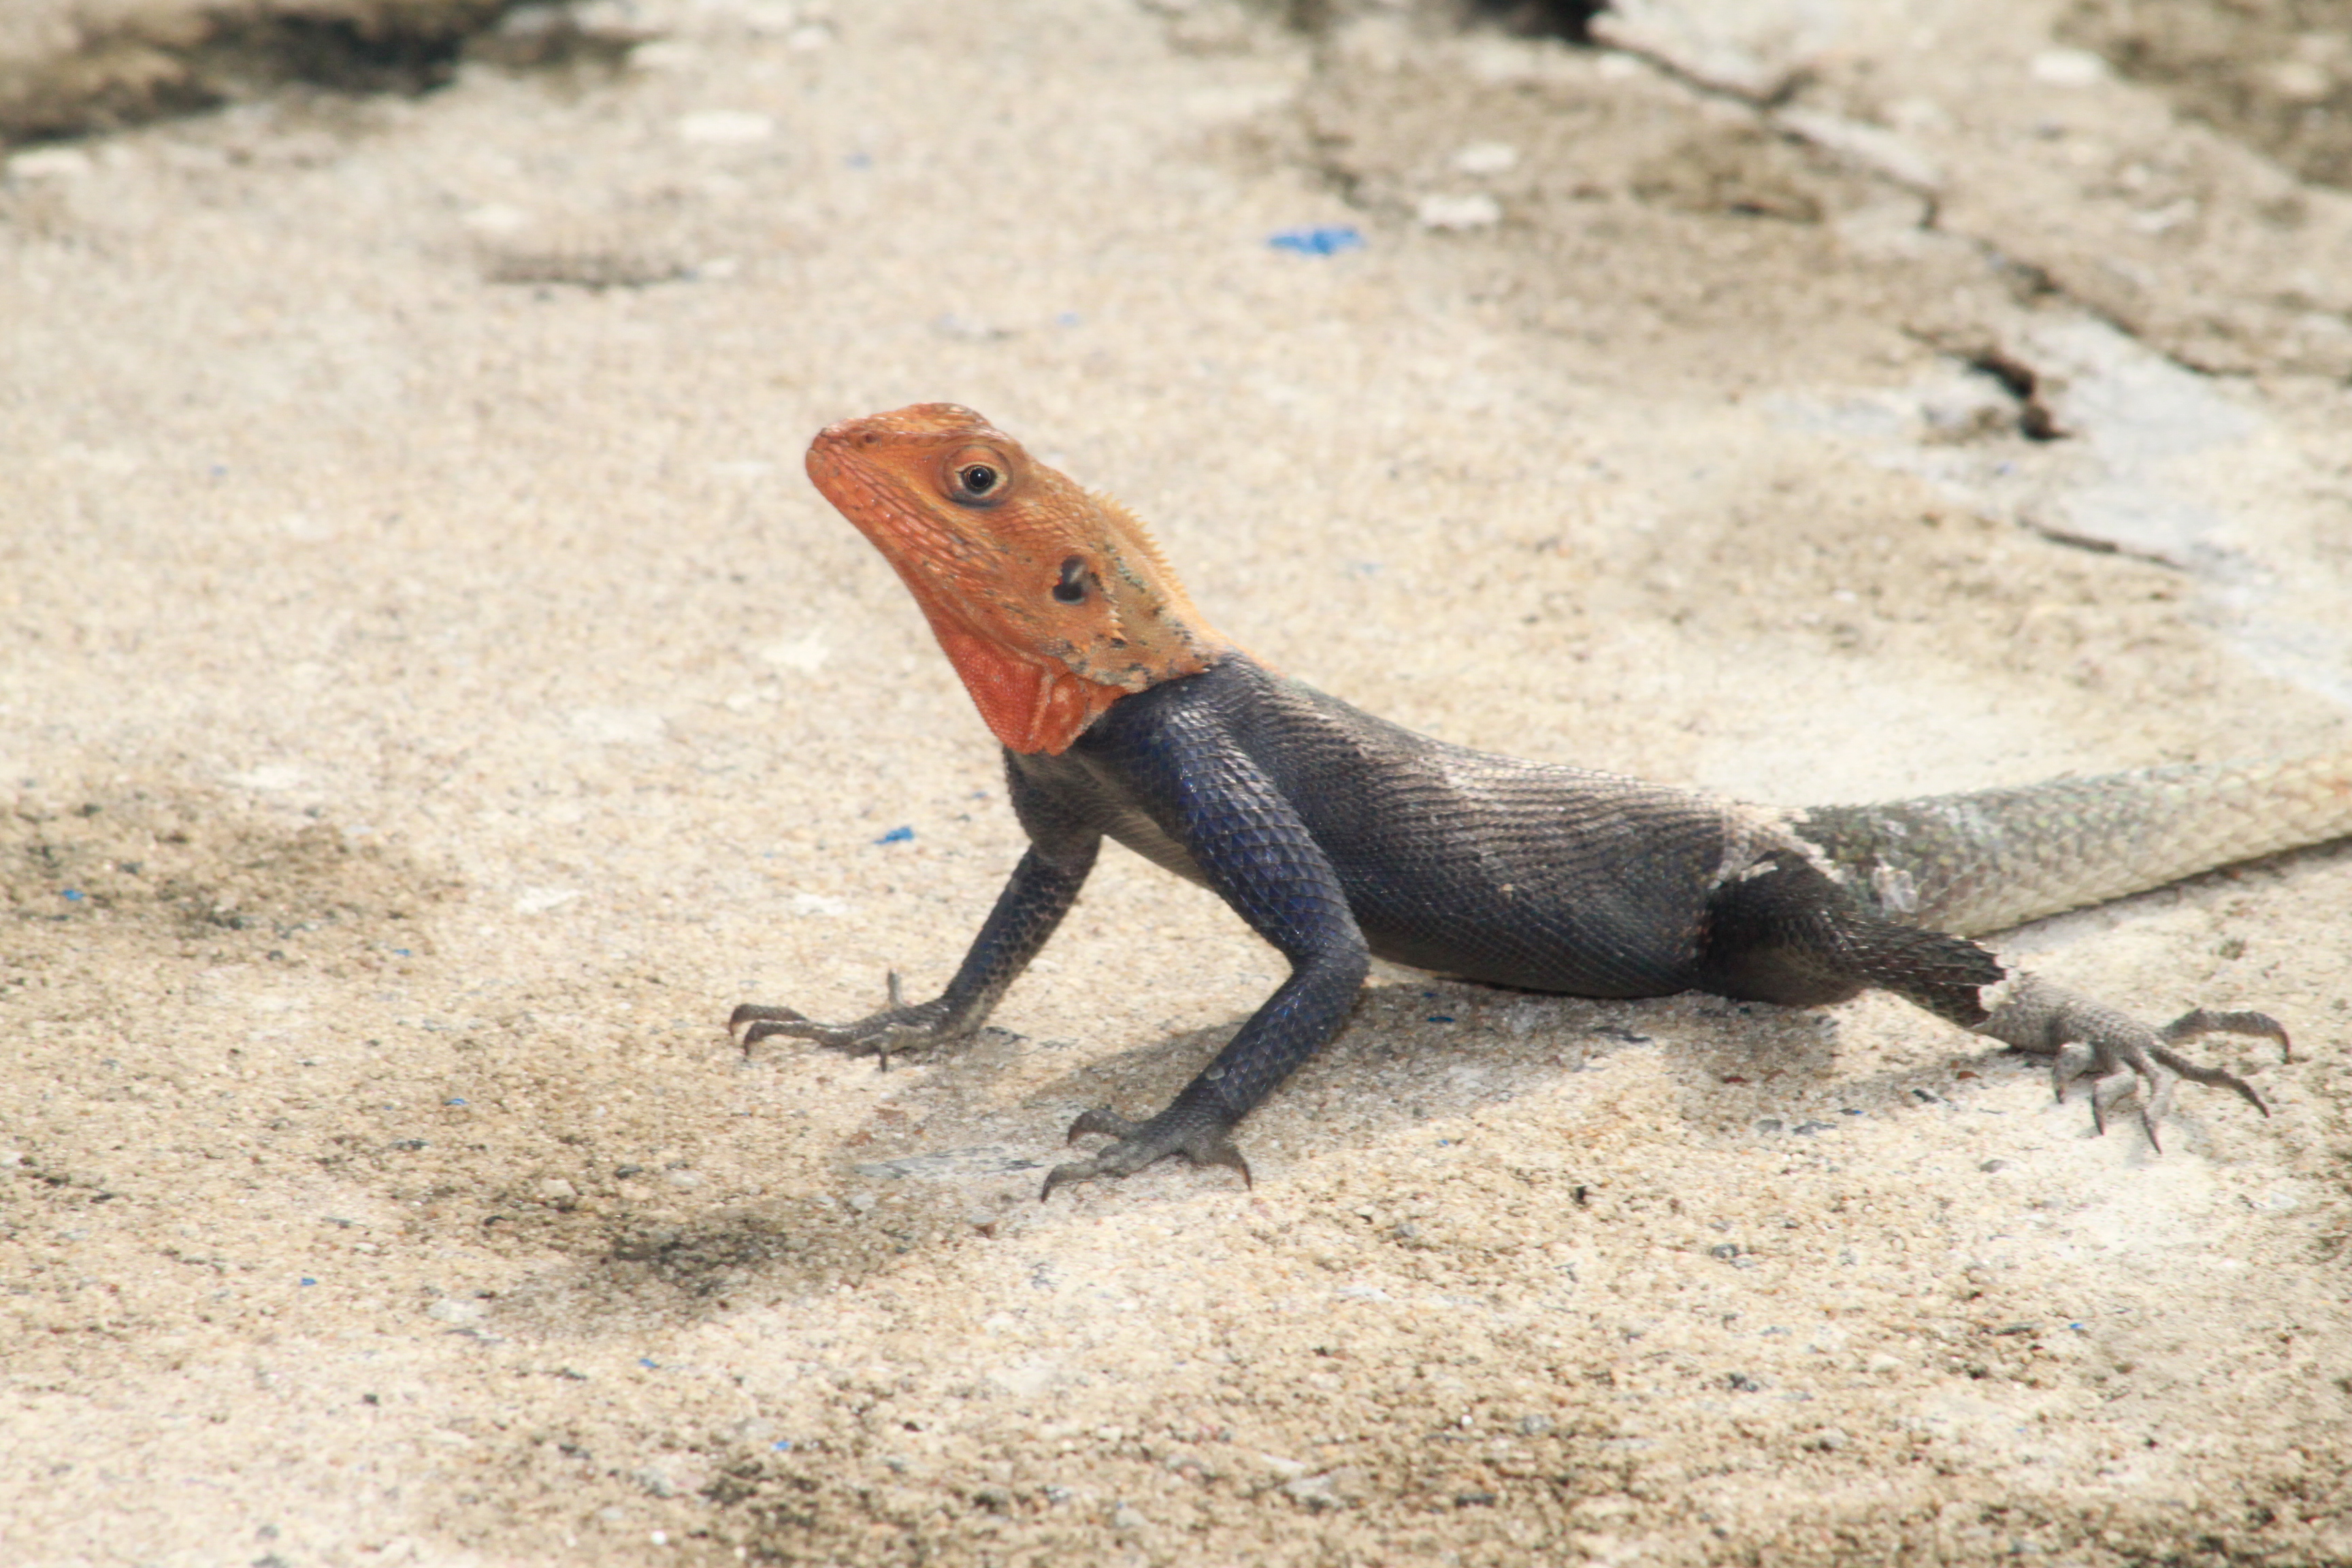 Red Headed Rock Agama Lizard near Libreville